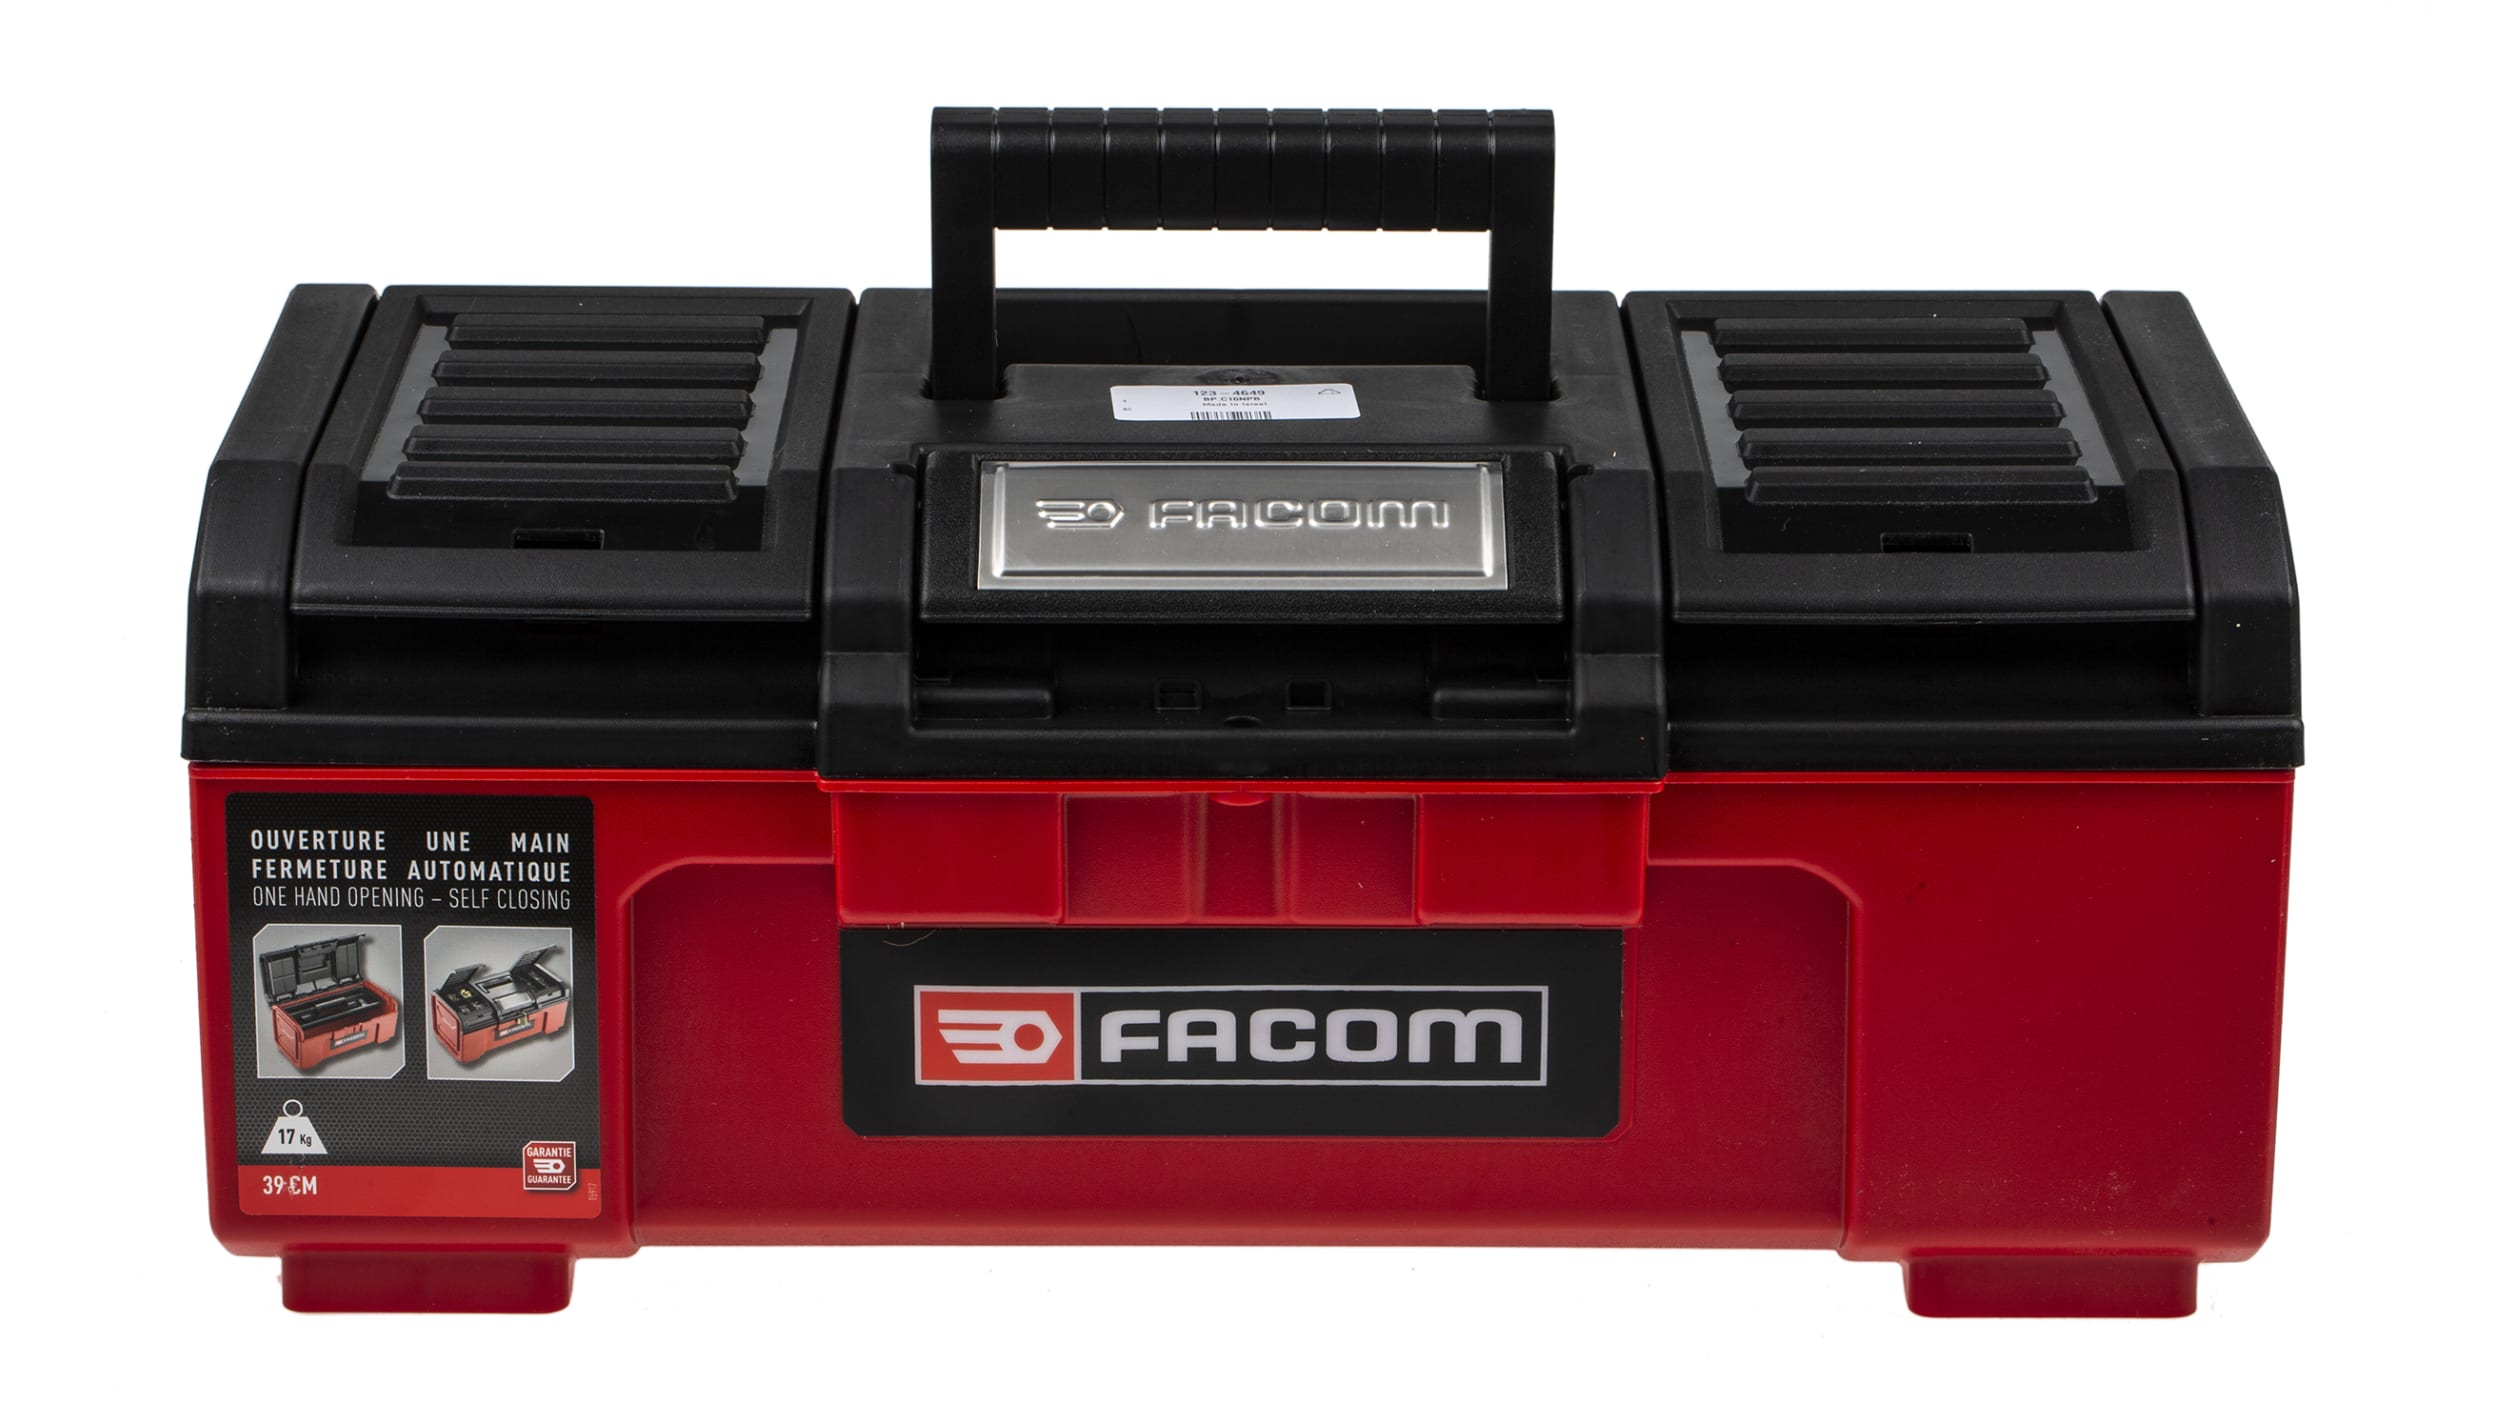 Caja de herramientas TOOL BOX - gran modelo 24 FACOM BP.C24 - SIA  Suministros